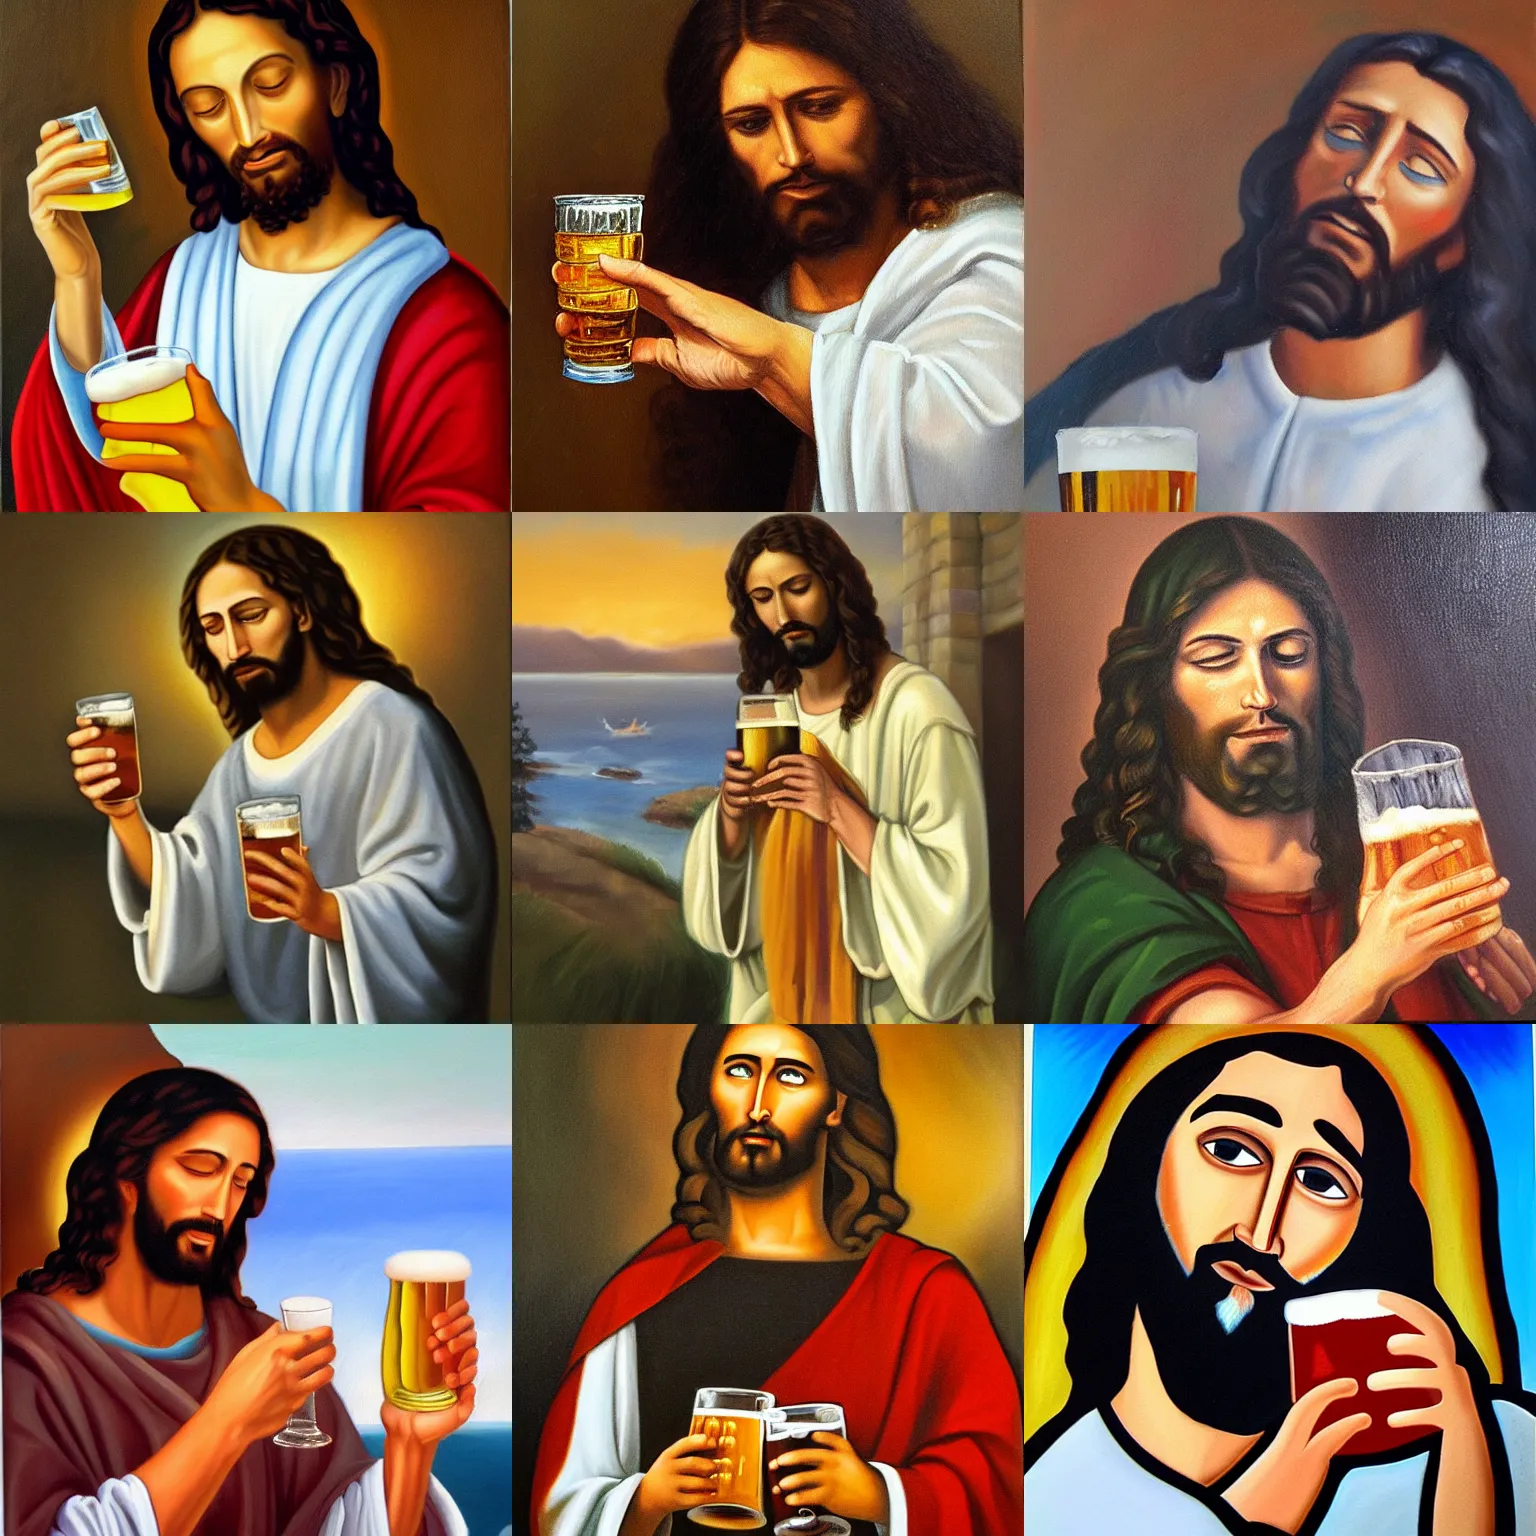 Prompt: oil painting of jesus drinking beer